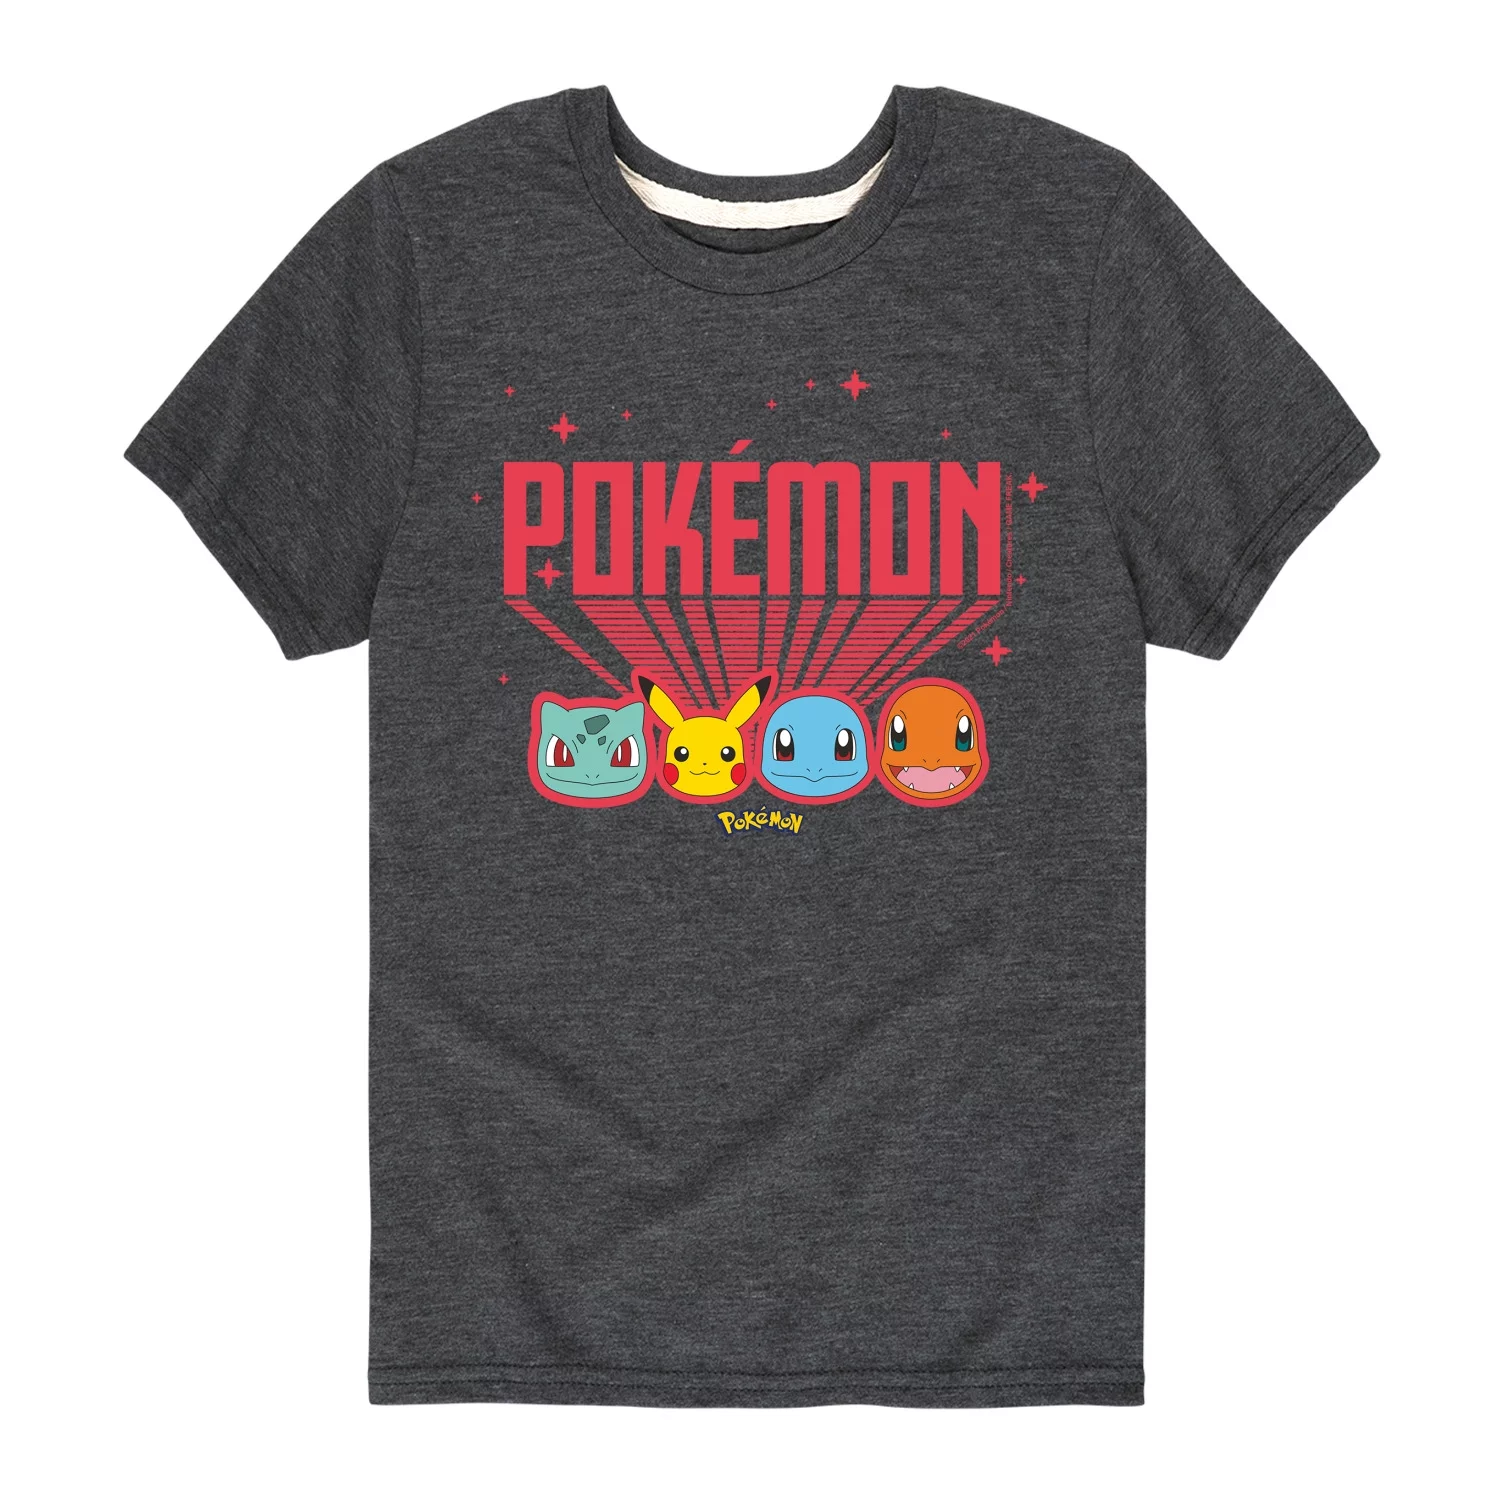 Pokémon - Retro Pokémon - Youth Short Sleeve Graphic T-Shirt